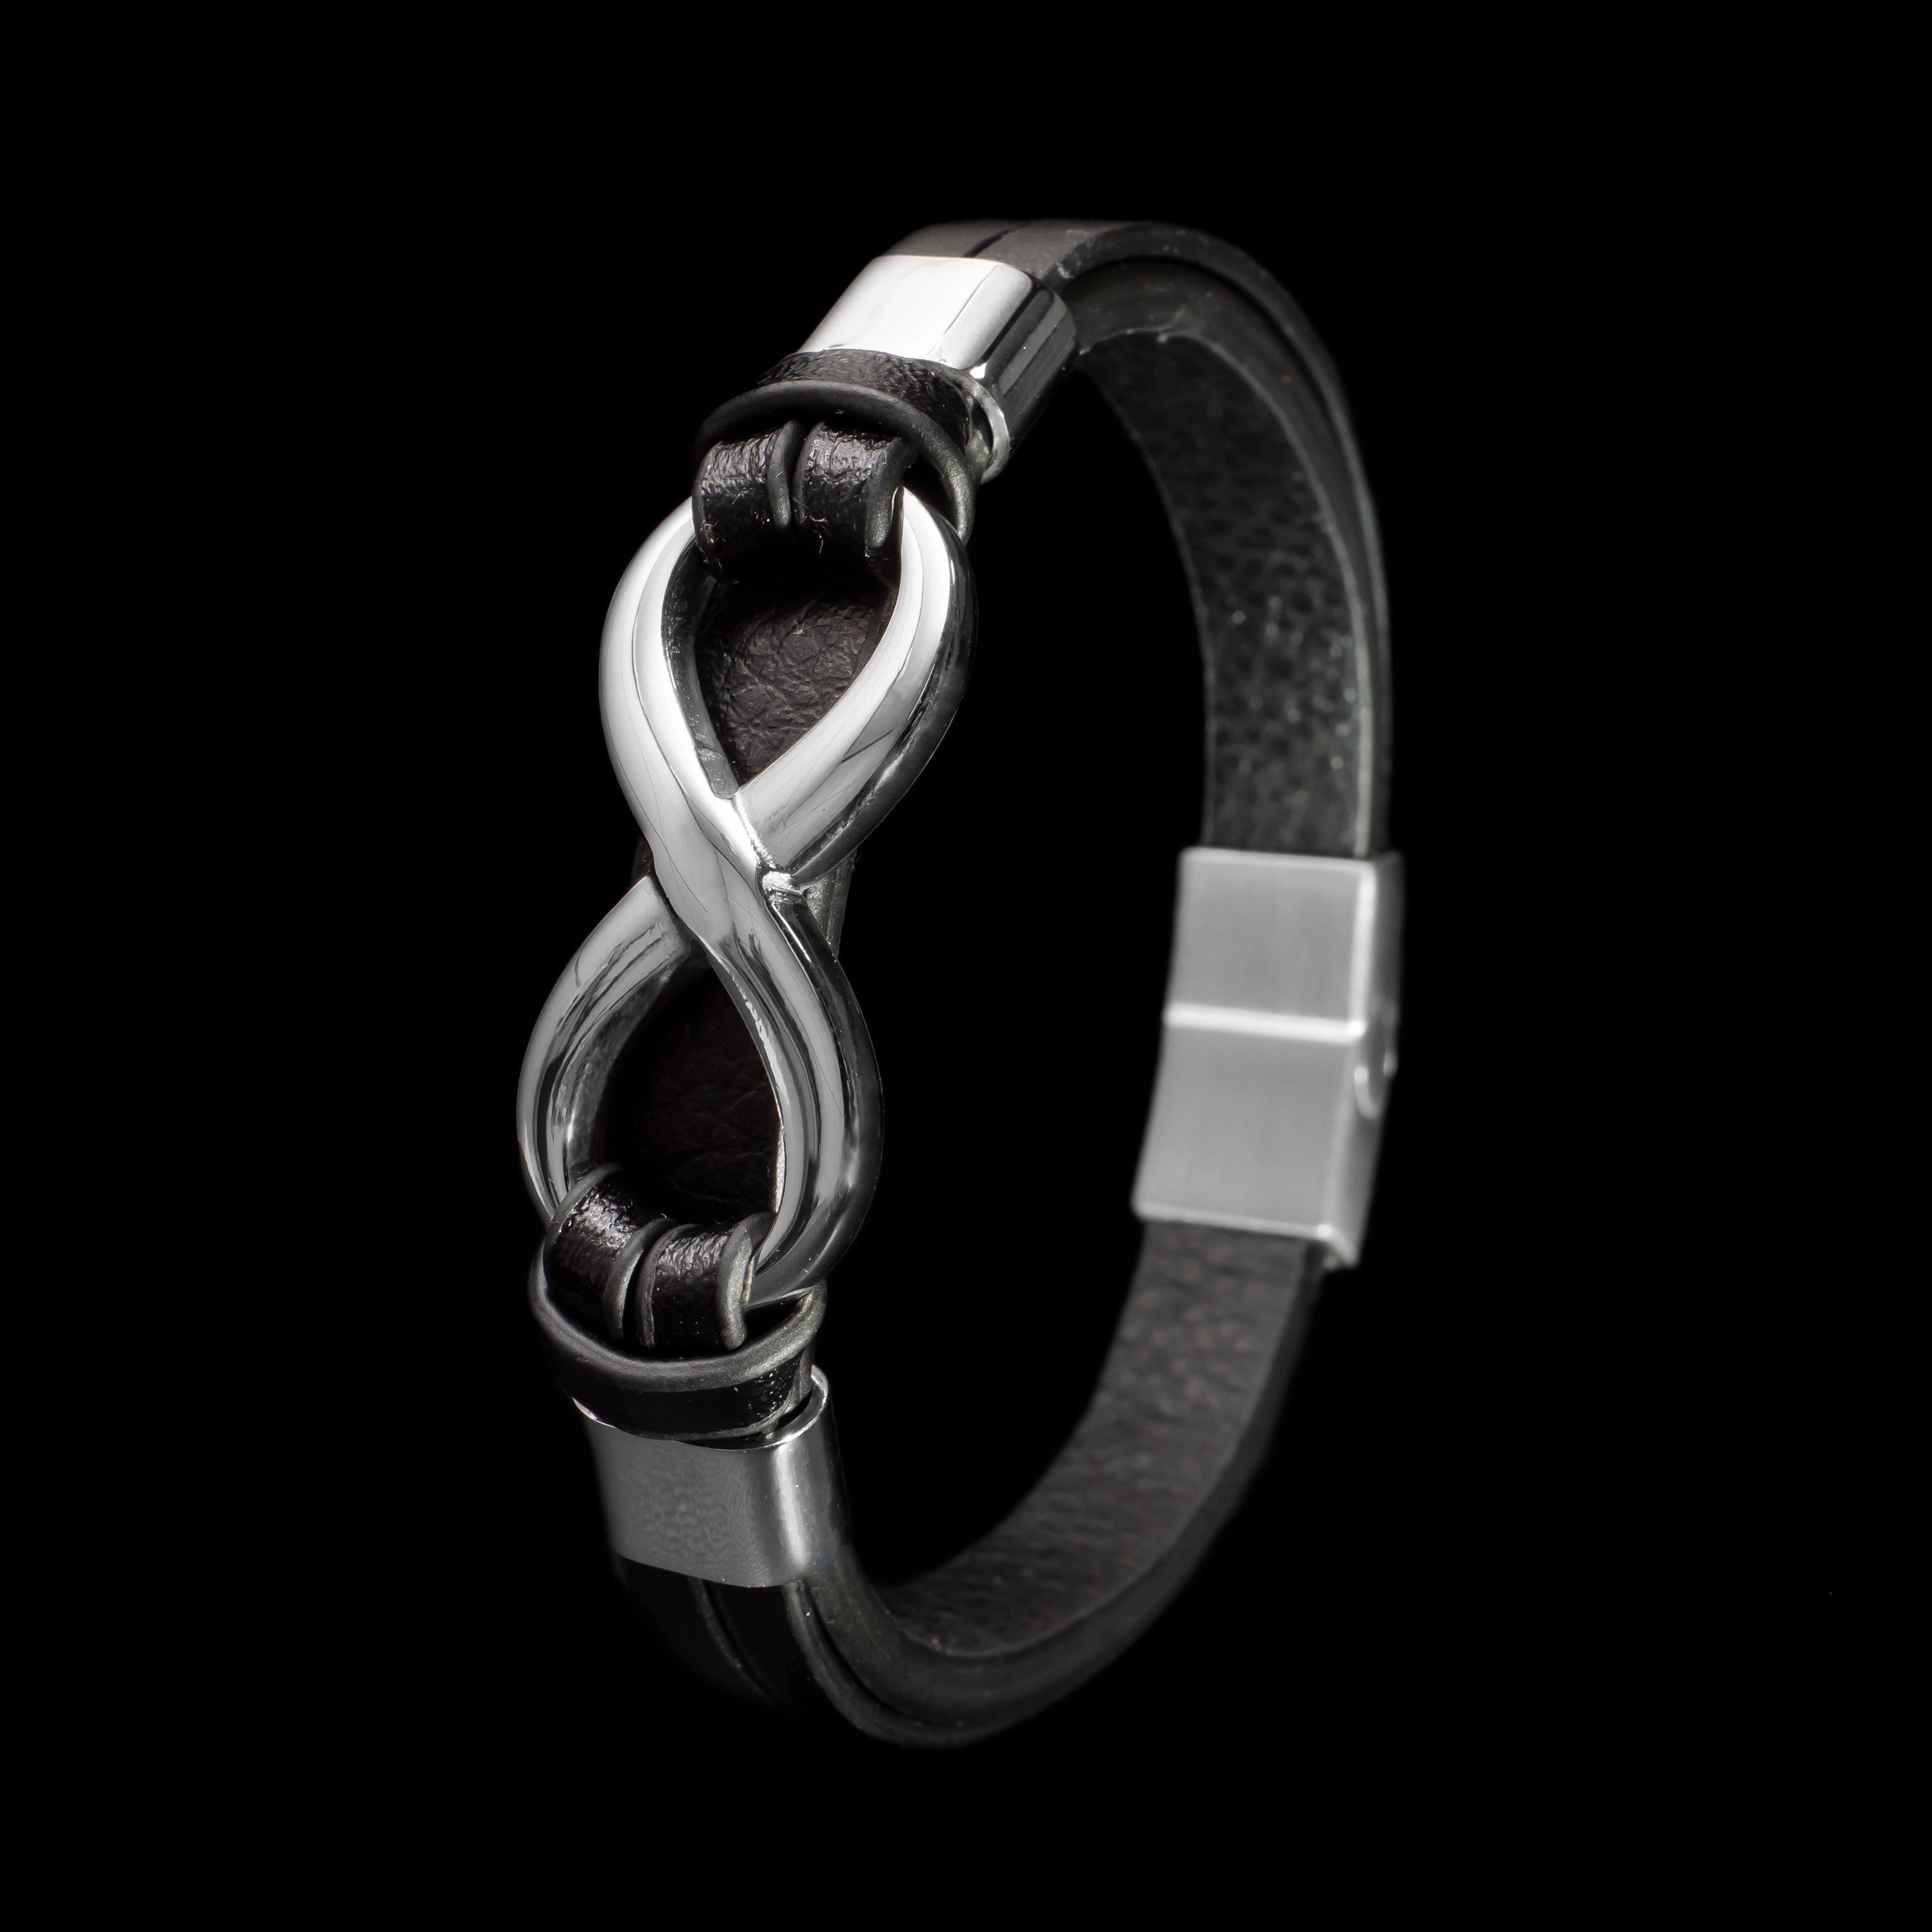 Designed Casual "INFINITY" Unendlichkeit (Edelstahl, Leder Armband Silber Echtleder, Herren Style, Lederarmband in Germany UNIQAL.de Handgefertigt),